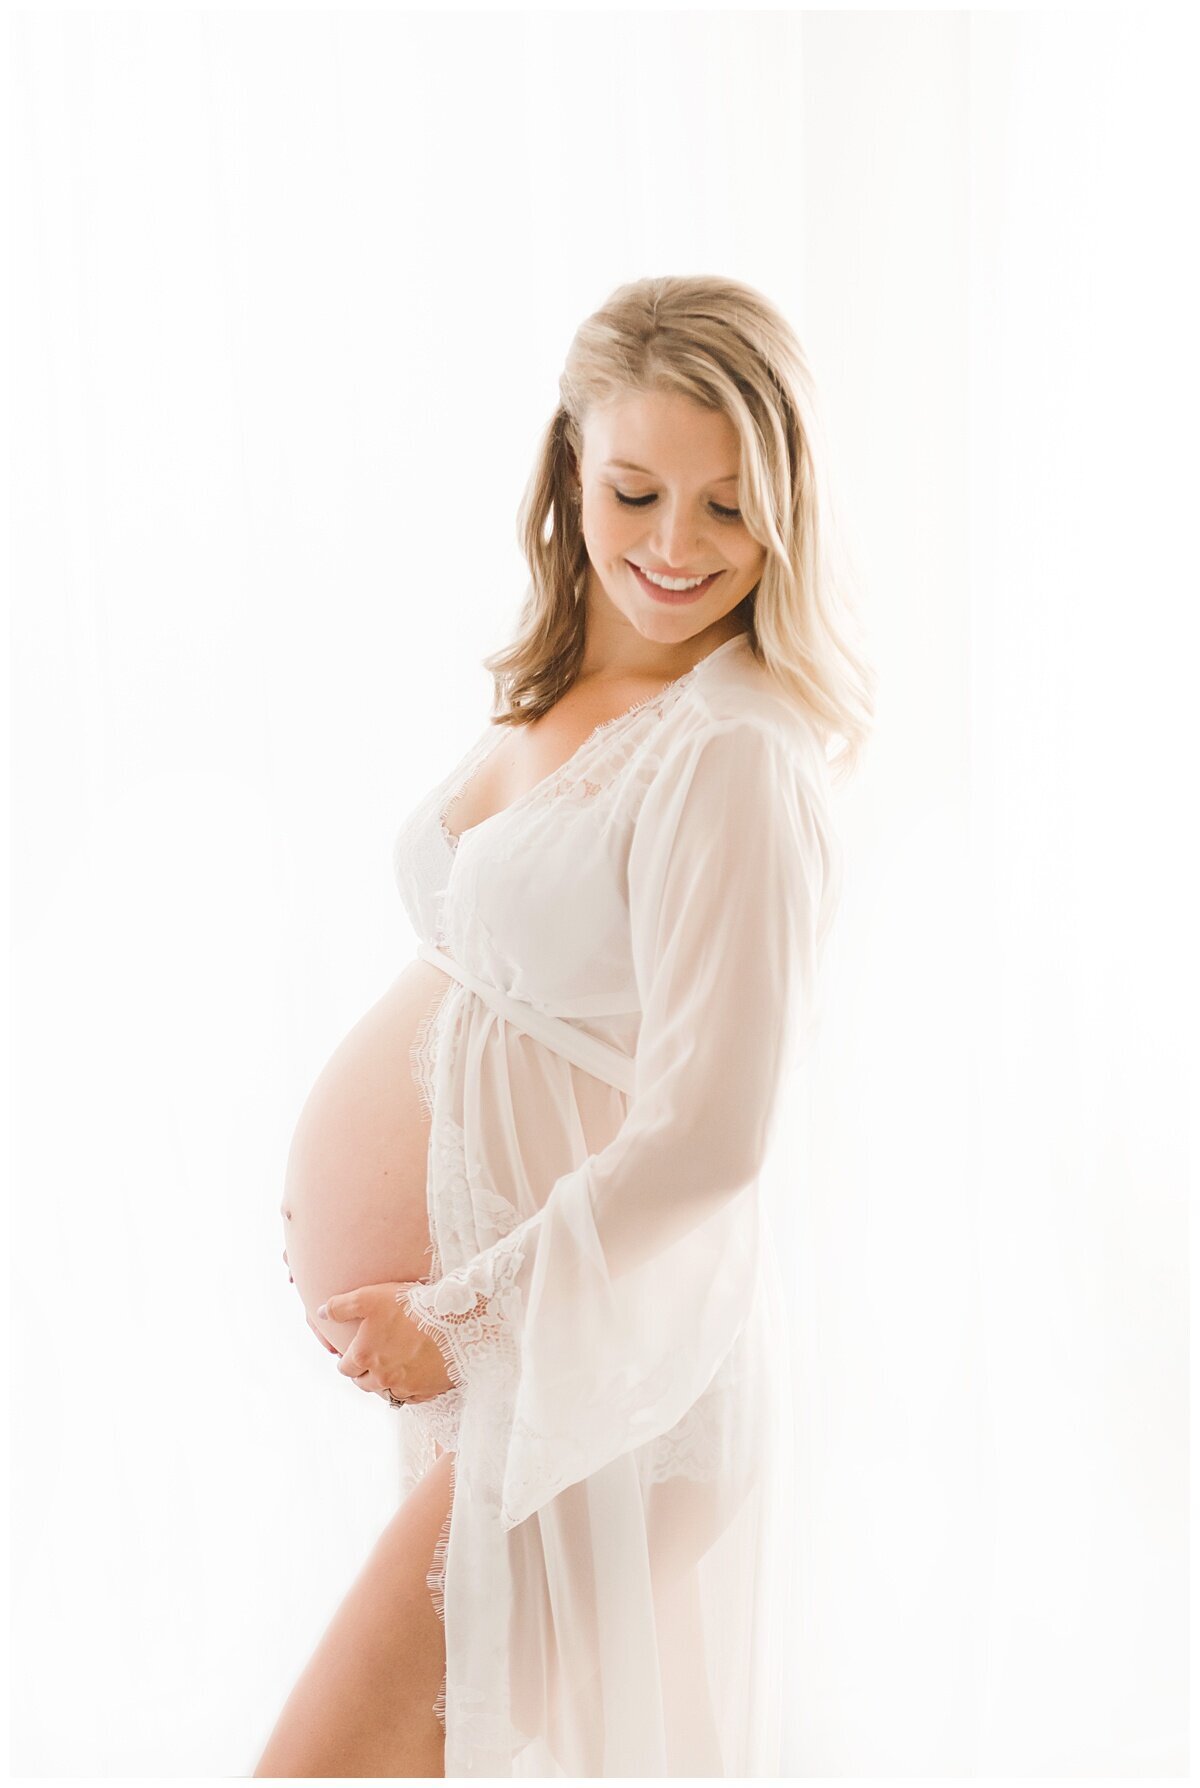 maternity-photography-boston_0321